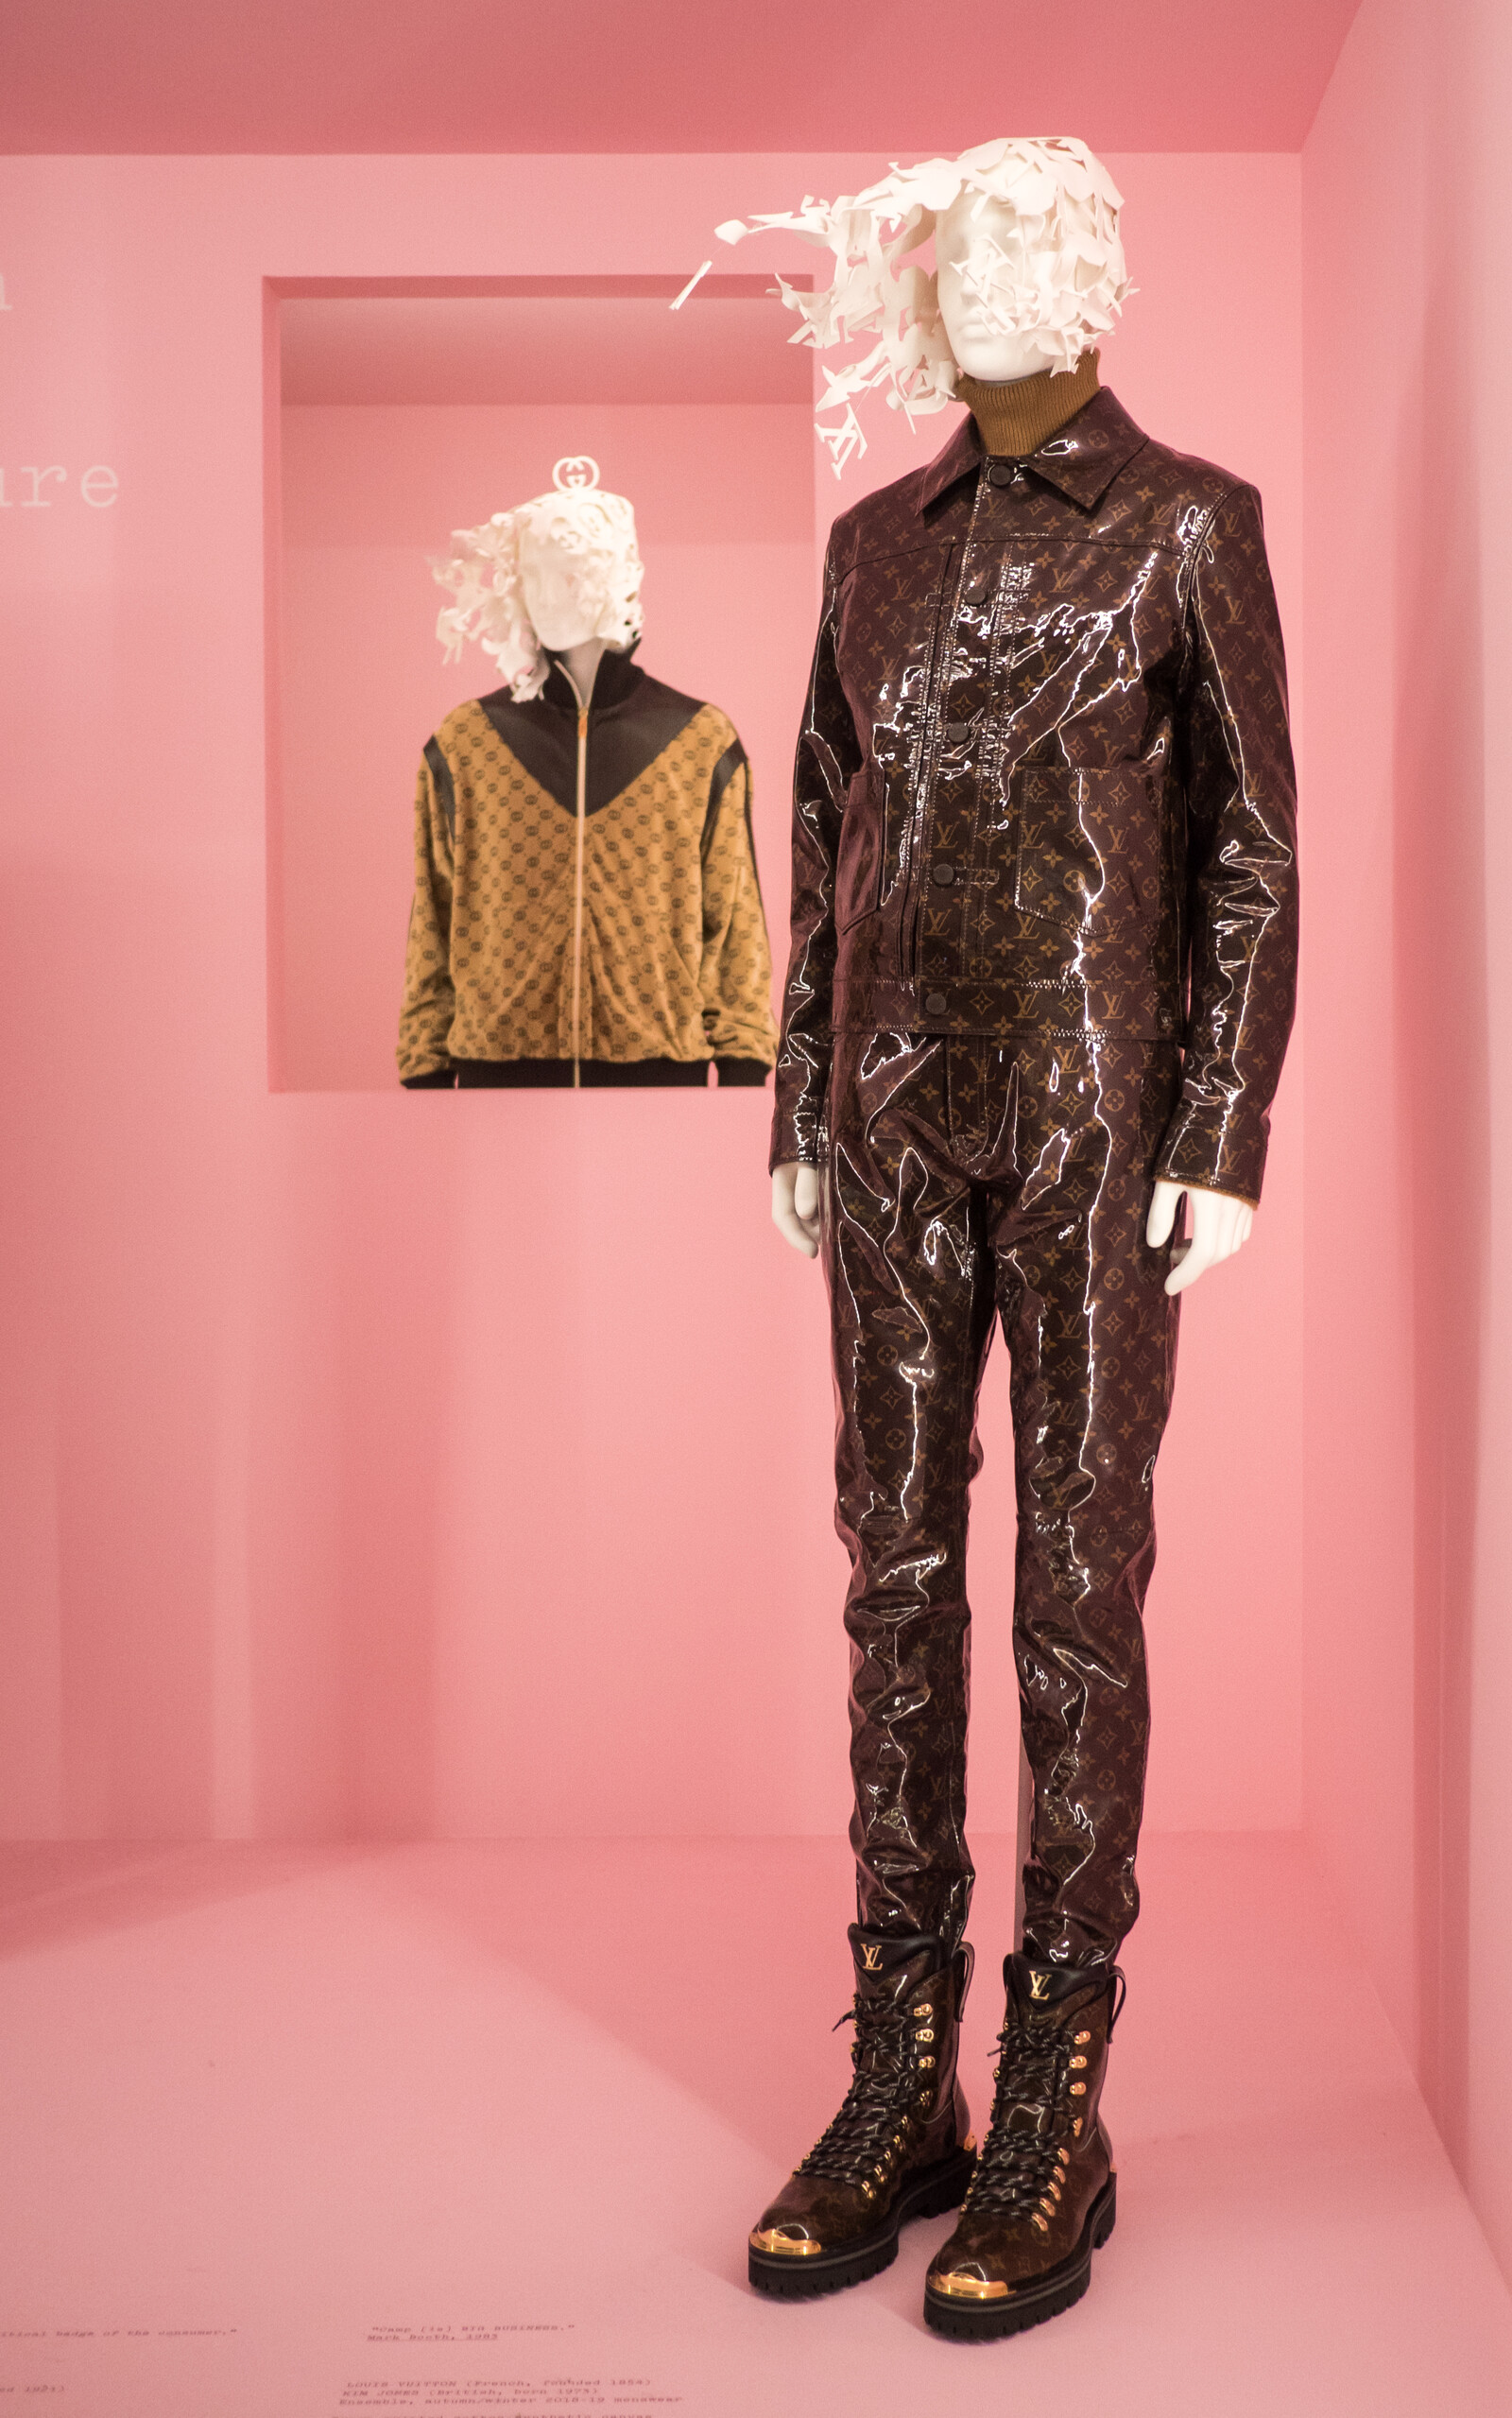 An ensemble by Jones for Louis Vuitton on display at The Met's exhibit Camp: Notes on Fashion, https://en.wikipedia.org/wiki/Kim_Jones_(designer)